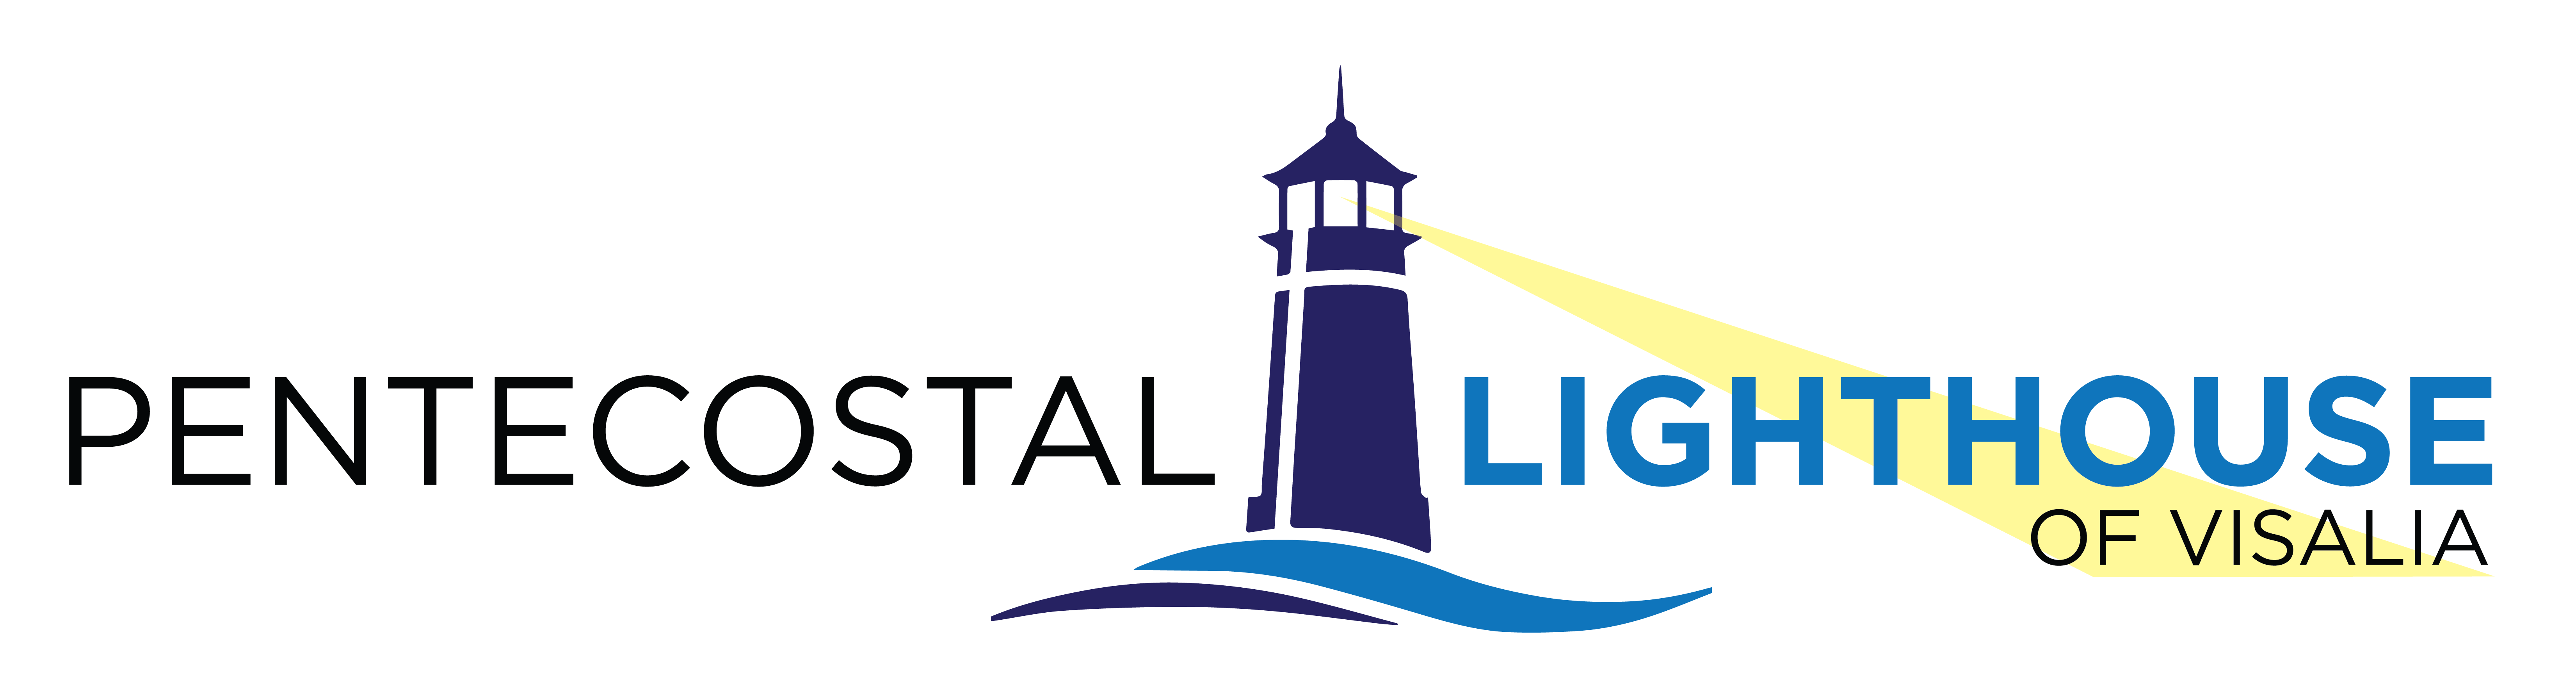 Pentecostal Lighthouse Visalia